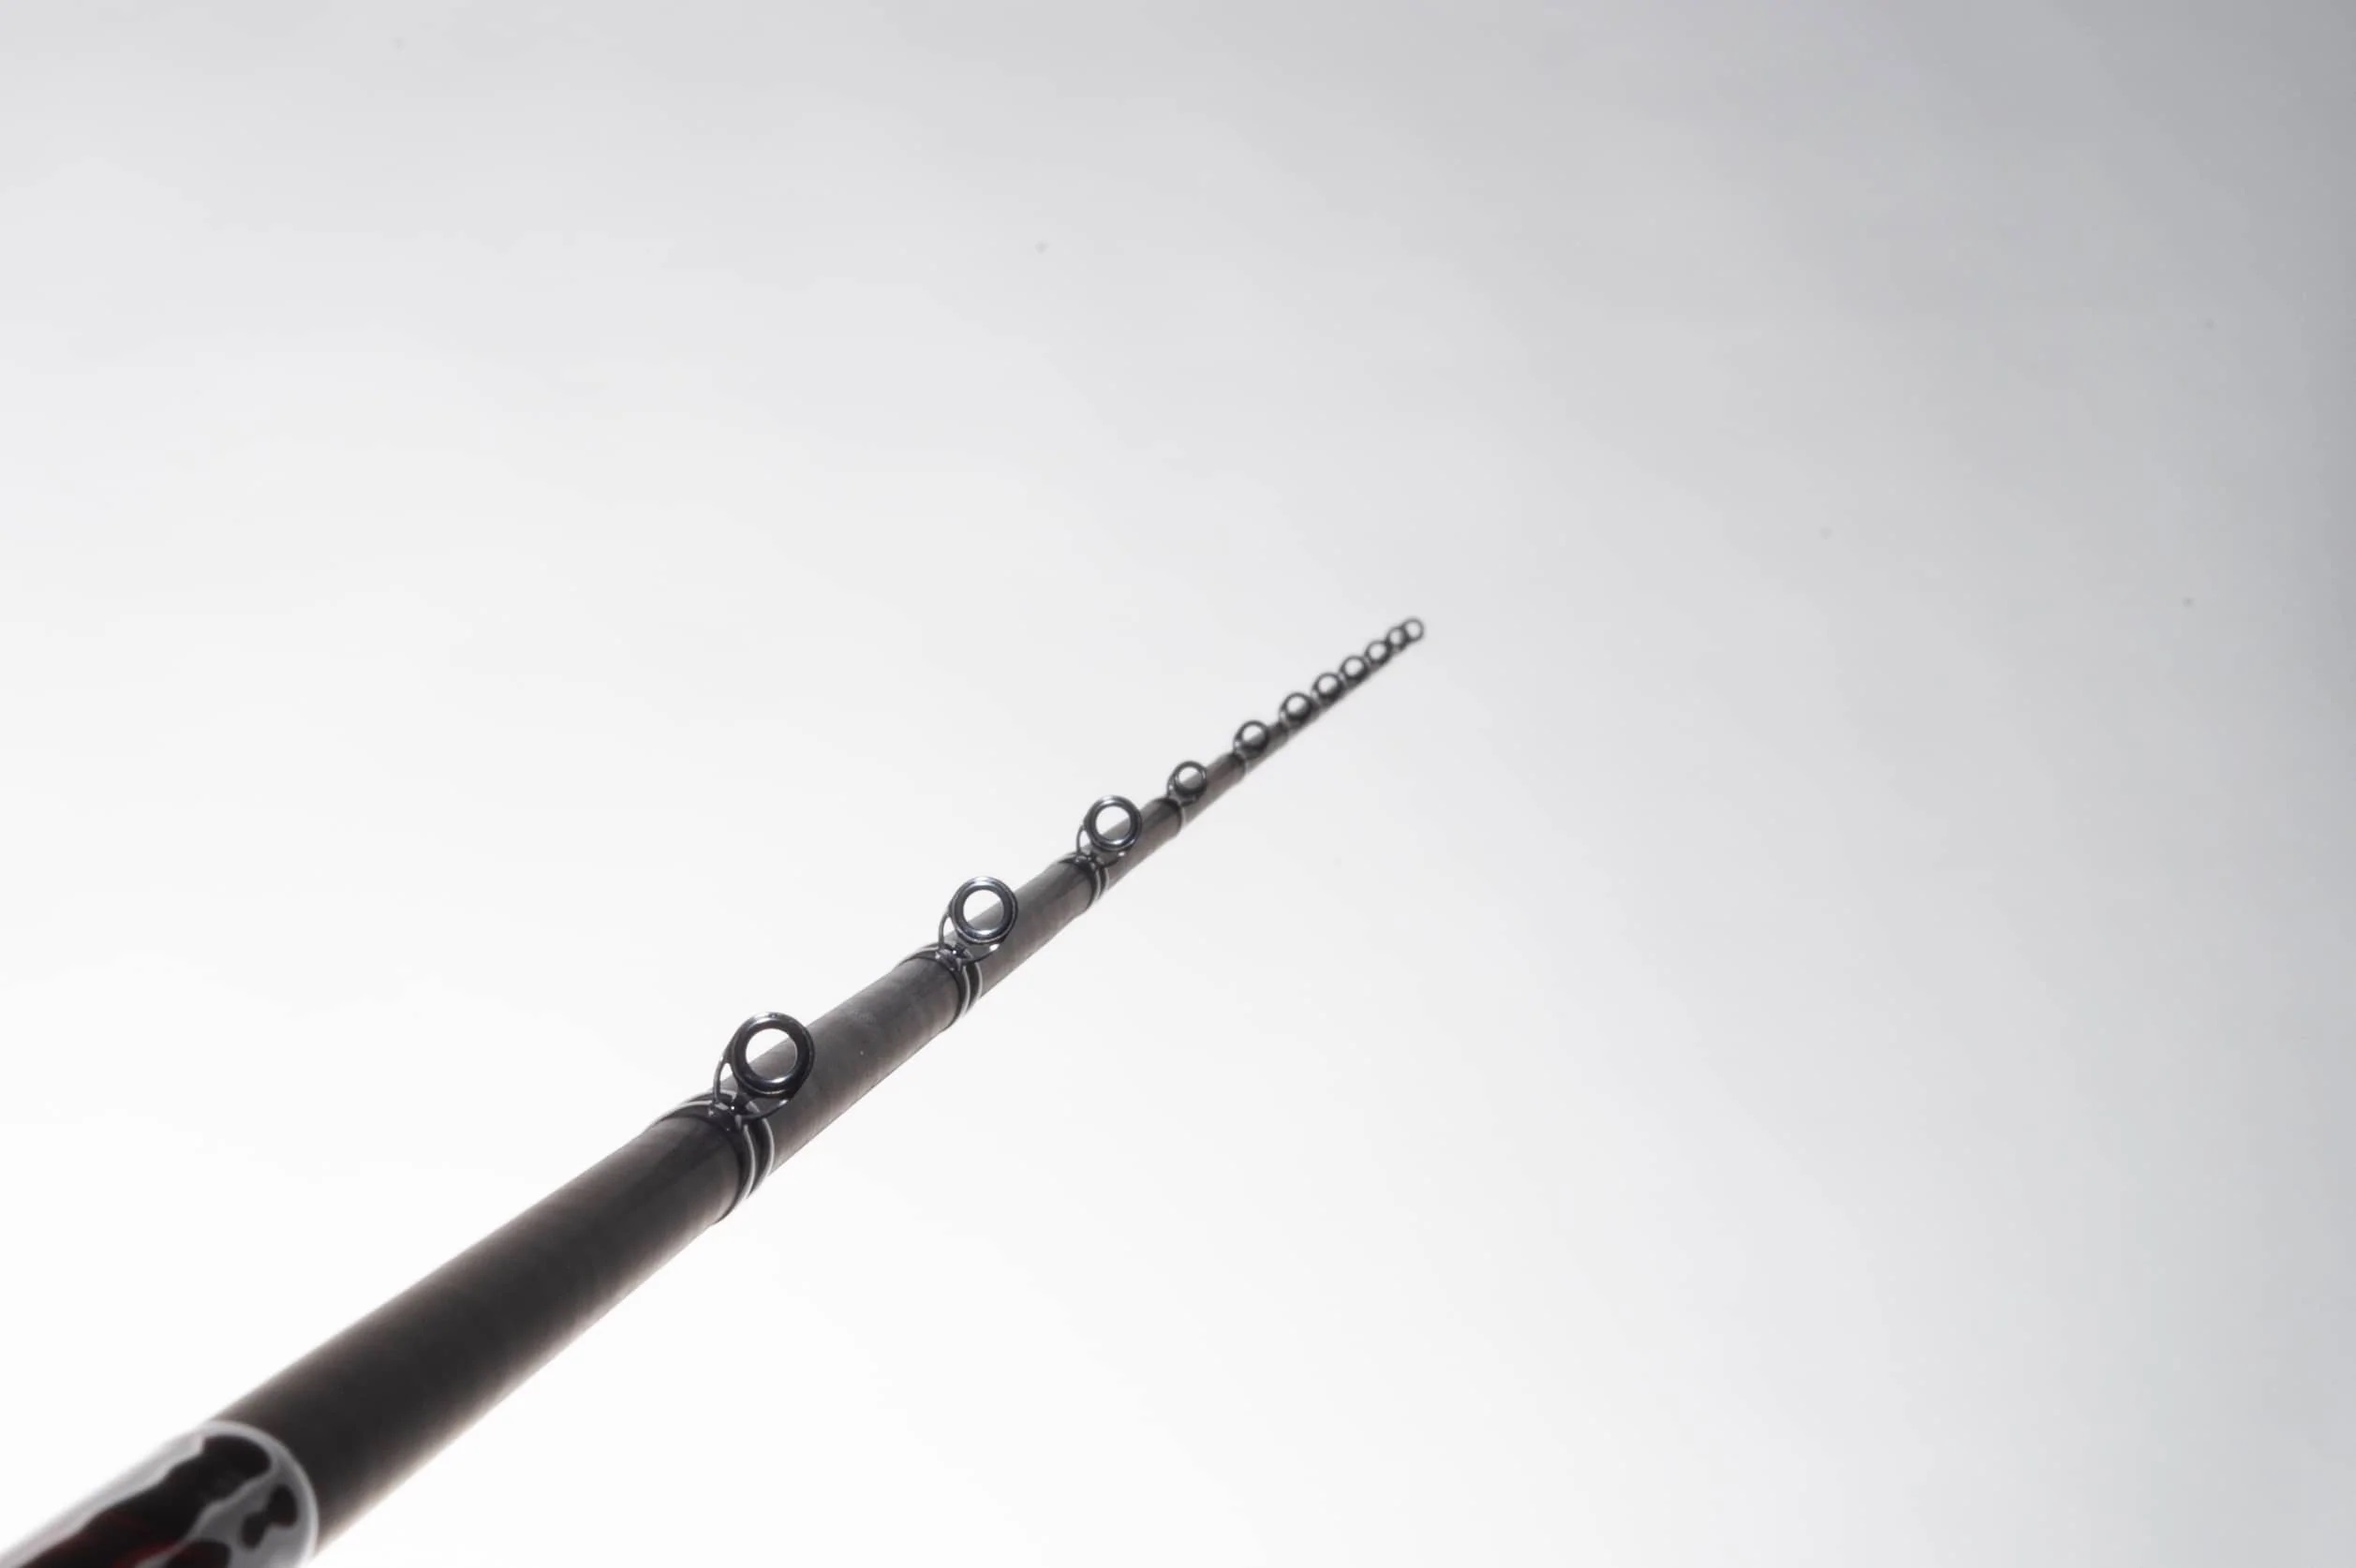 KLX Deep Cranks, Swimbait, Umbrella Rigs Casting Rods – KISTLER Fishing